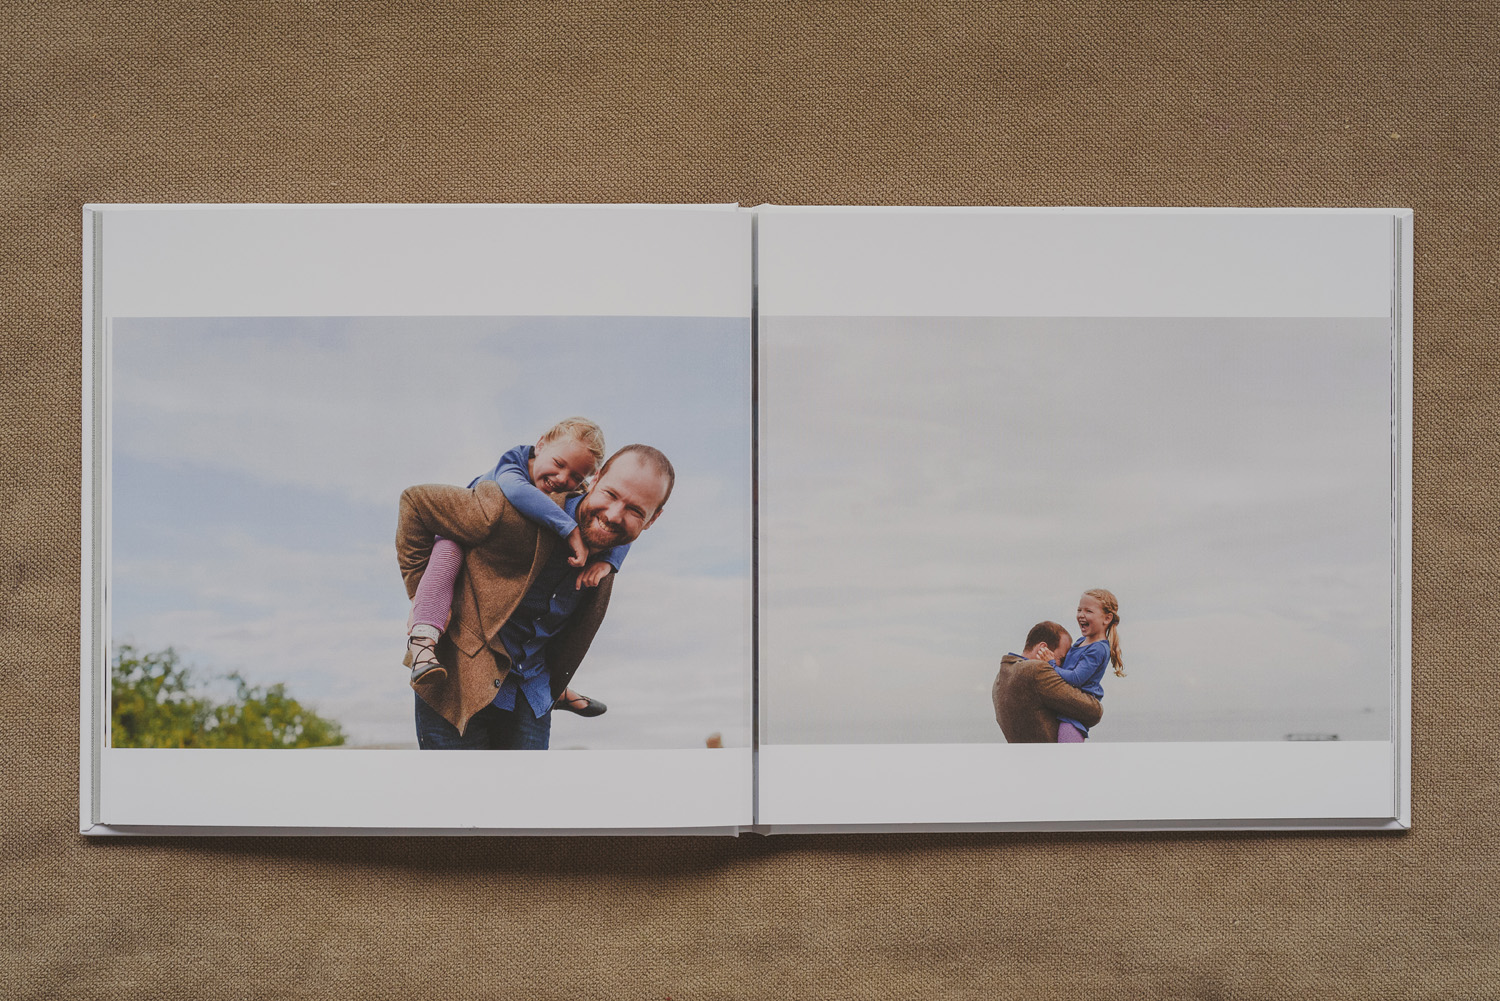 beautiful family photo book-dad piggybacking young daughter laughing